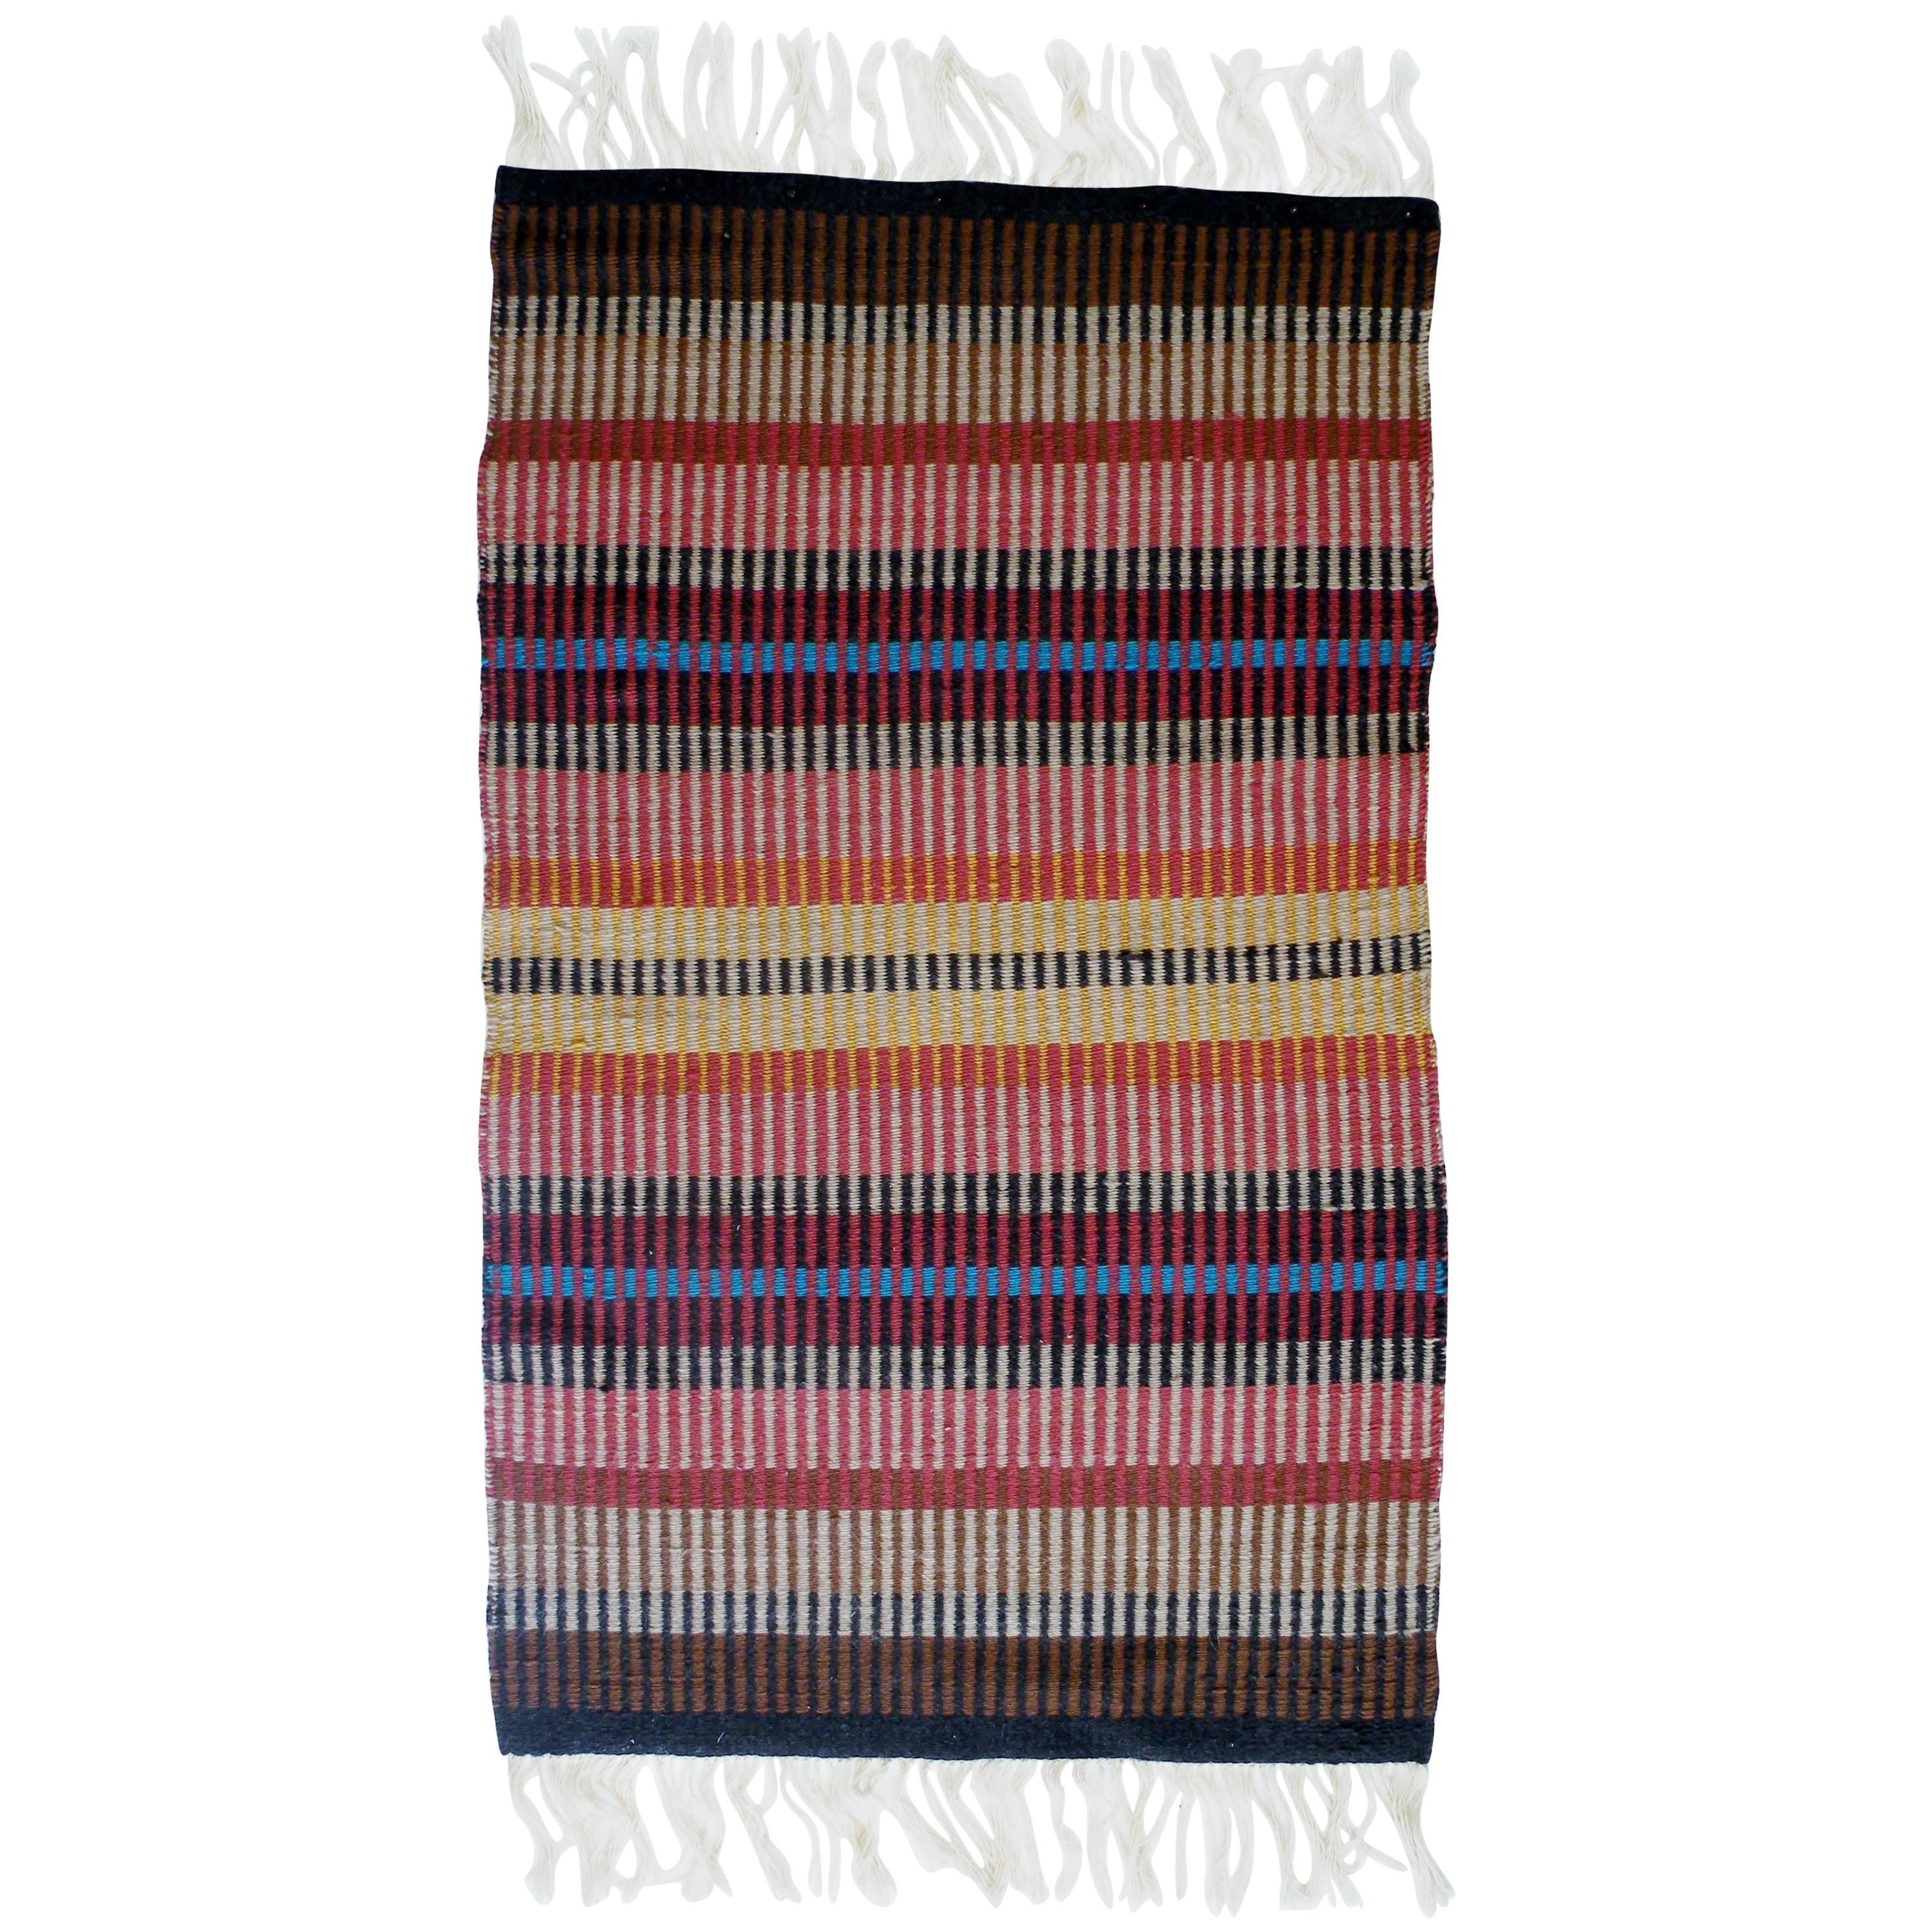 California Craft Linear Abstract Woven Textile Bauhaus Inspired Rug